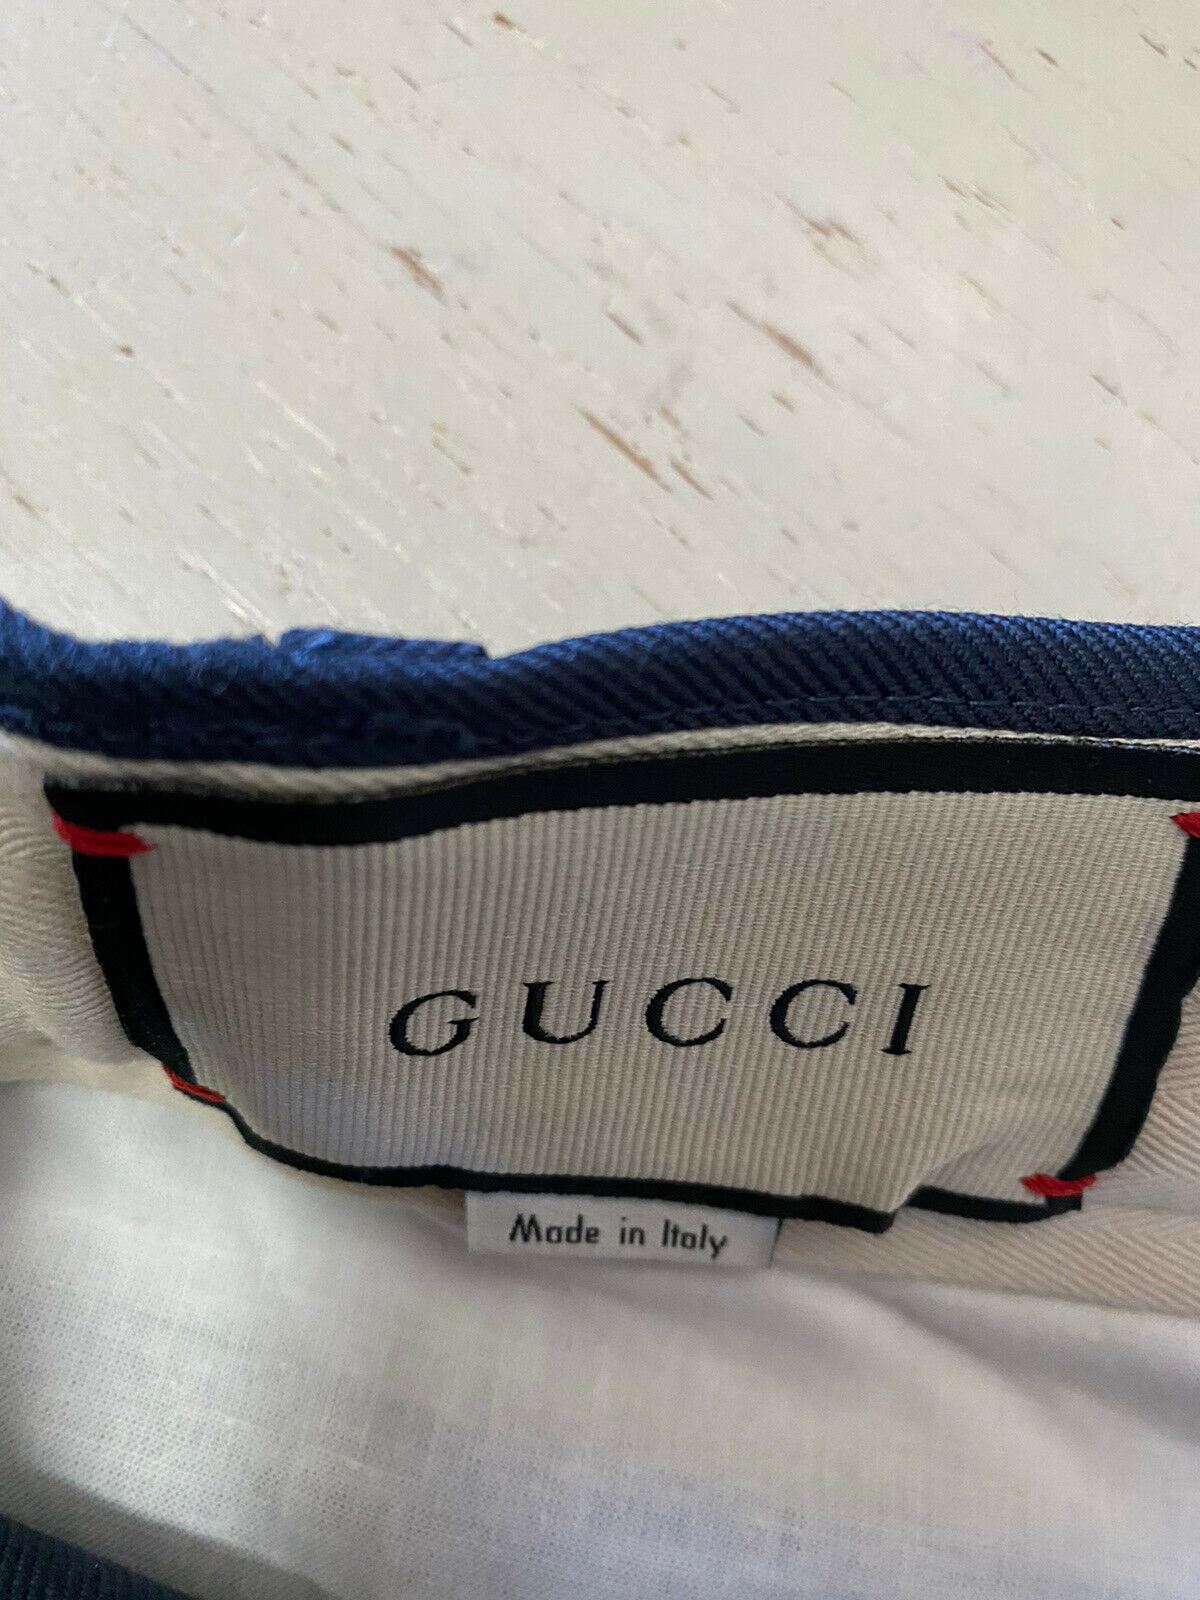 NWT $880 Gucci Men’s Pants Blue/Midnight Blue 34 US ( 50 Eu ) Italy